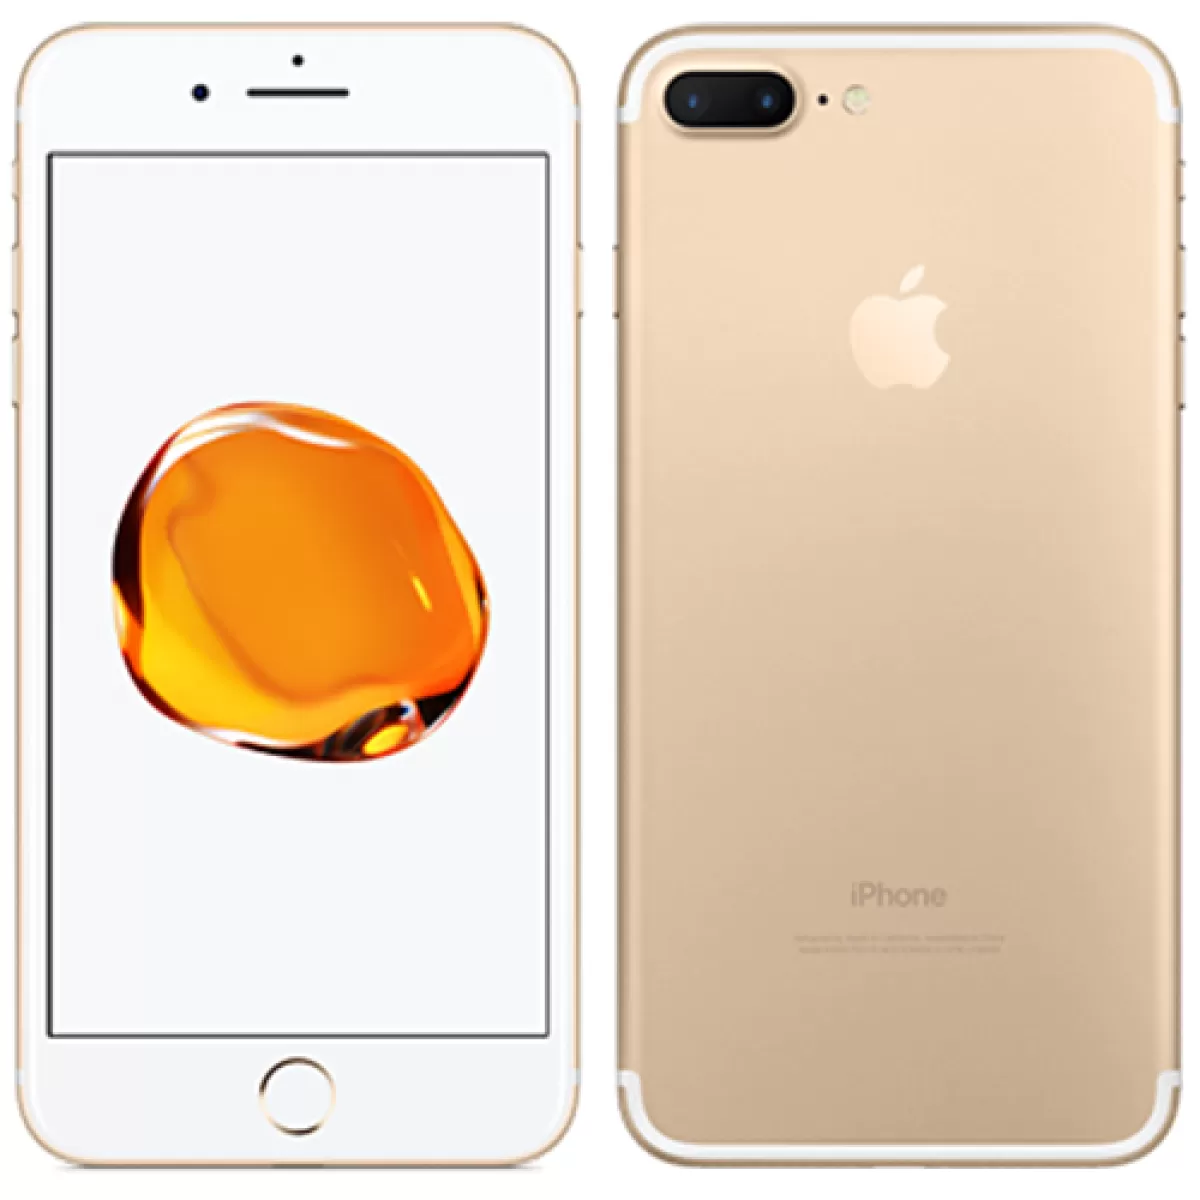 Смартфон Apple iPhone 7 Plus 32GB Gold